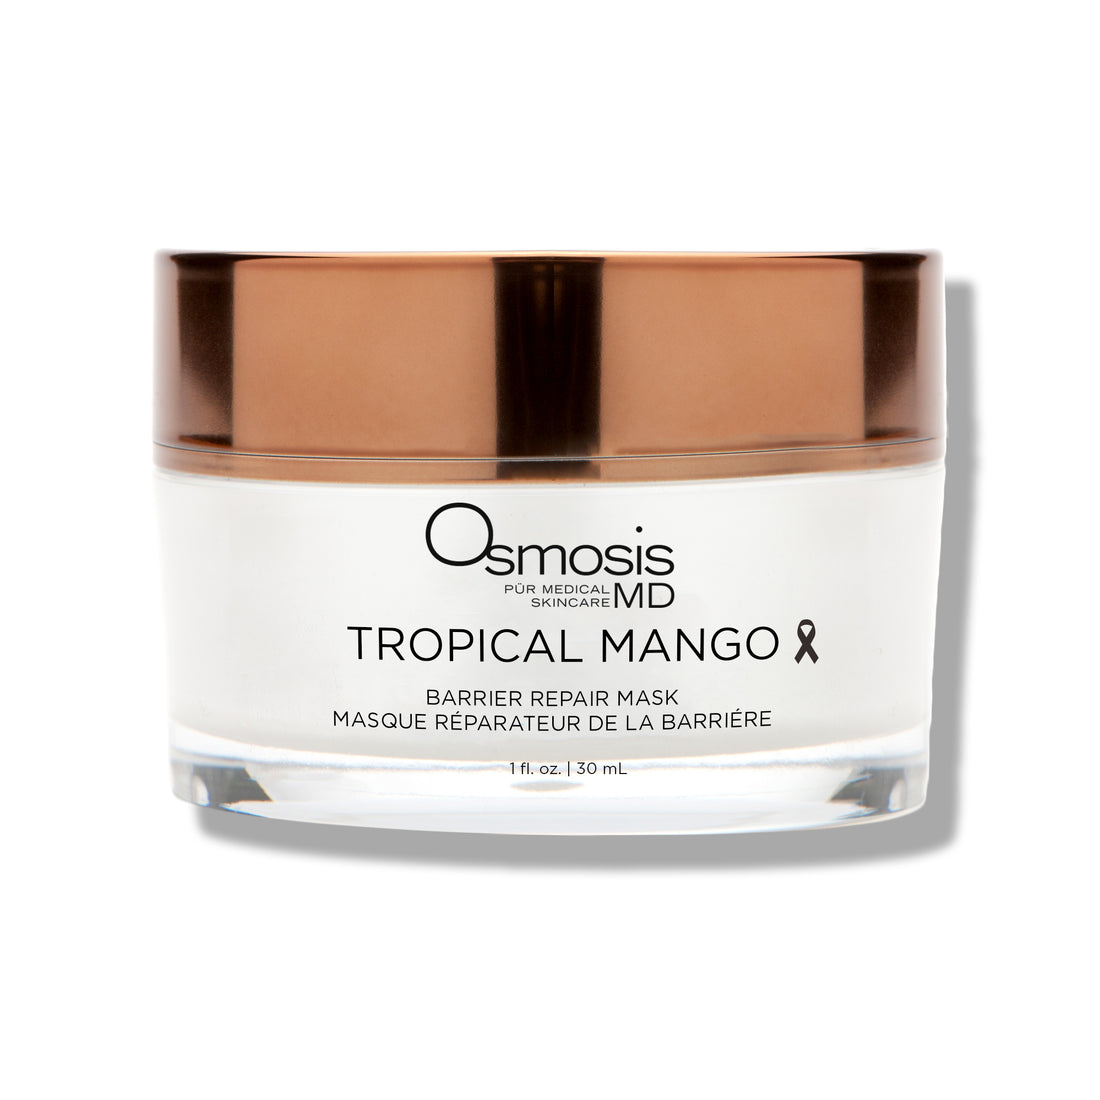 Osmosis Tropical Mango Mask Barrier Repair Mask